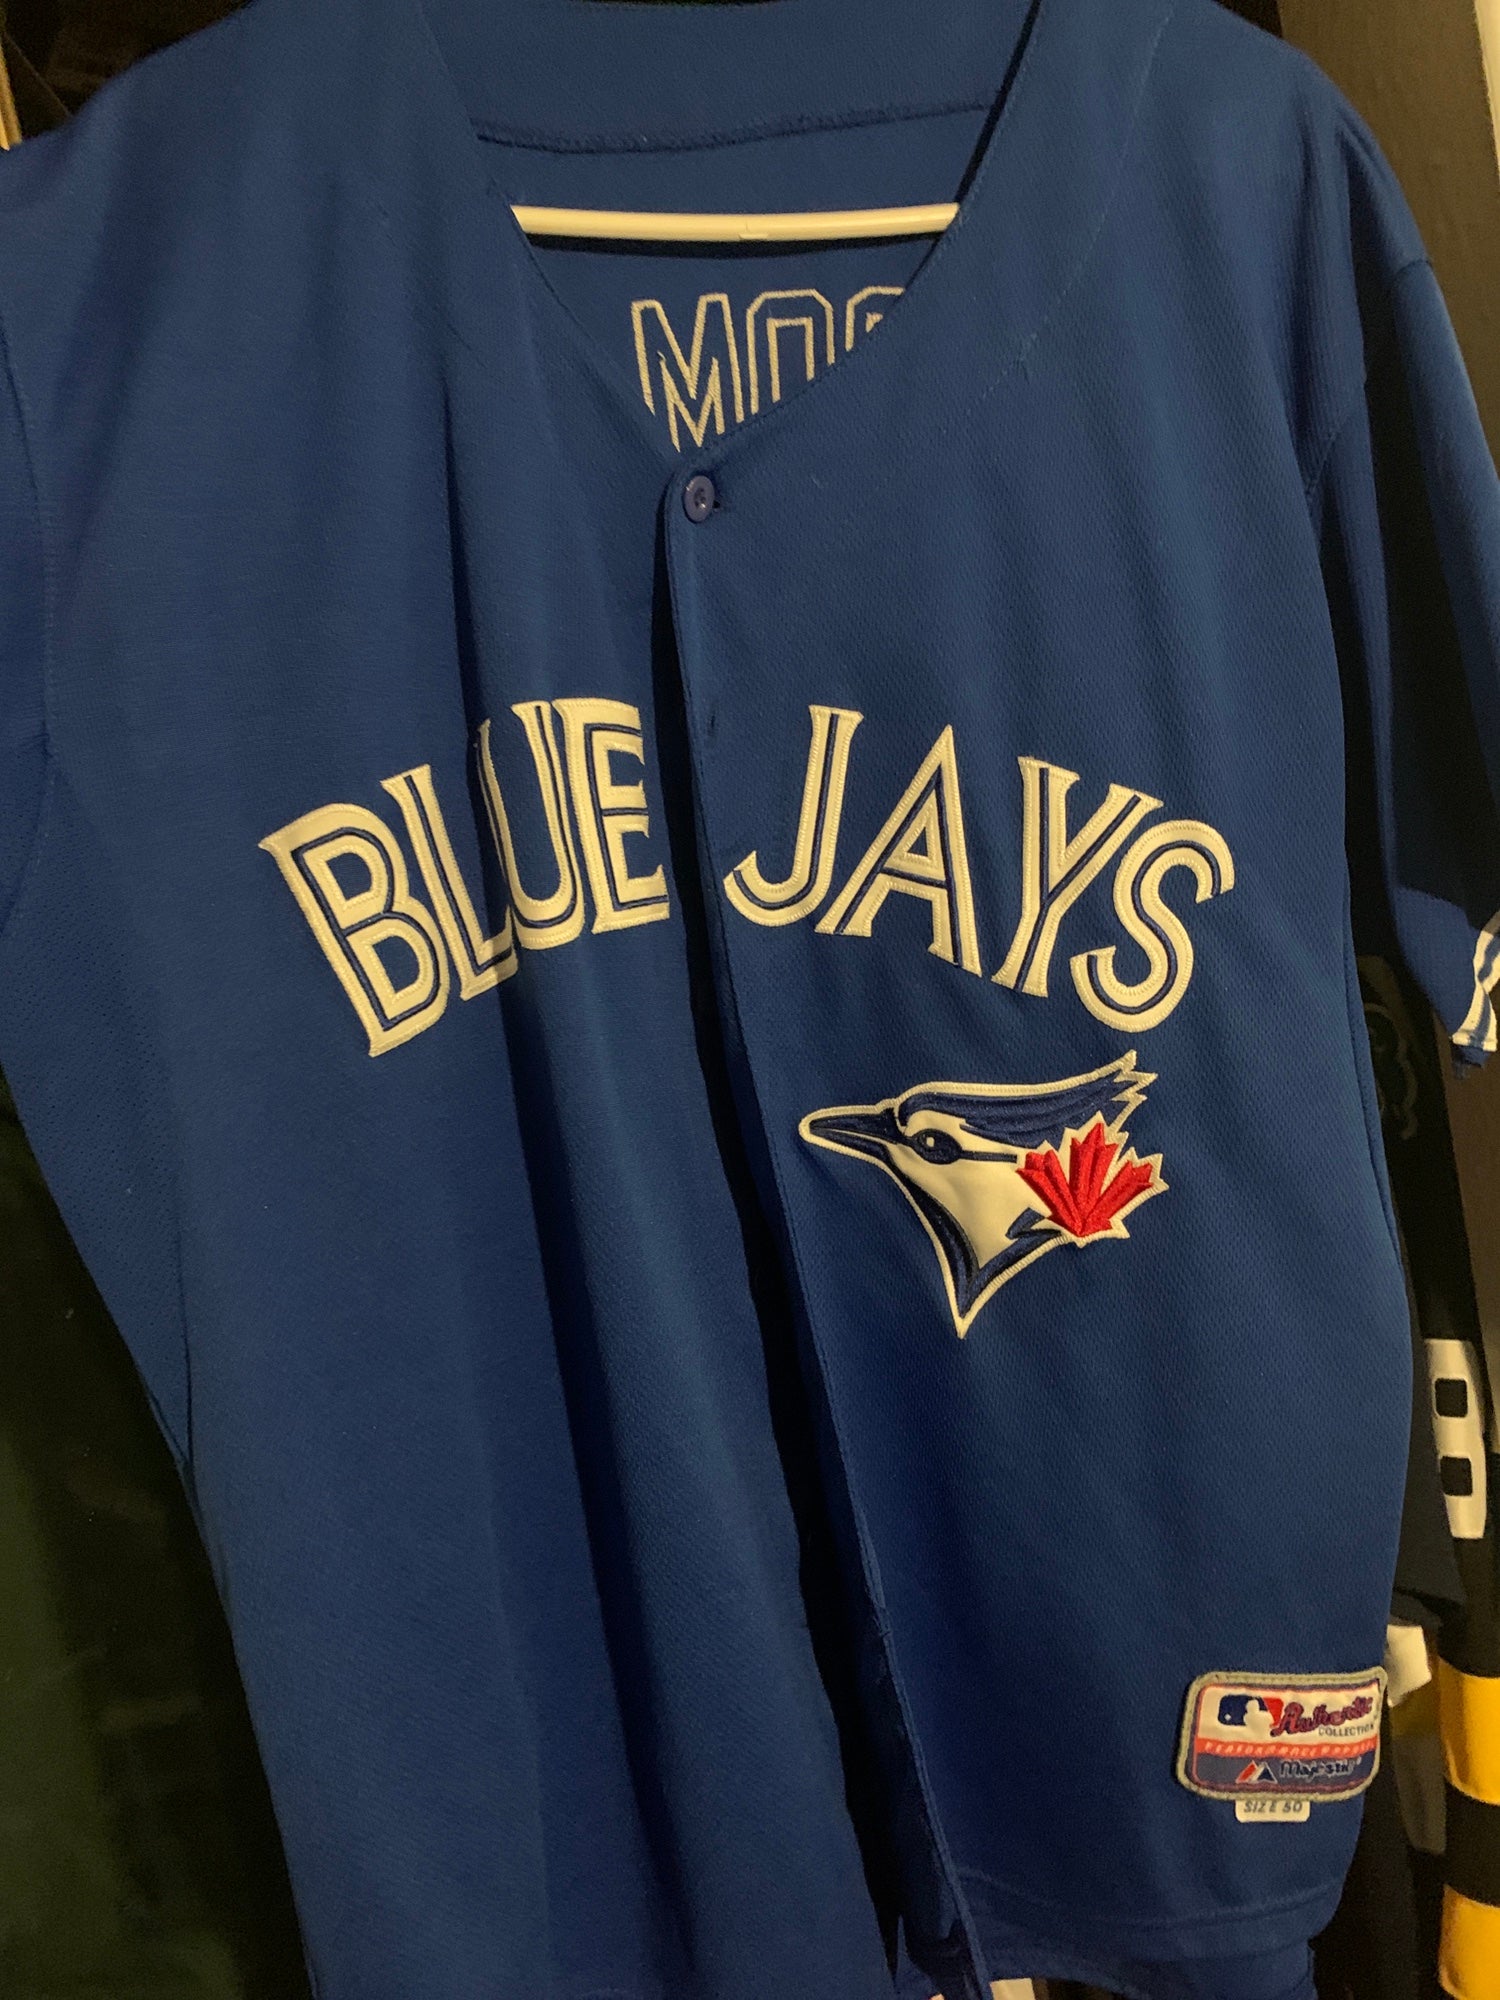 Toronto Blue Jays Apparel, Blue Jays Jersey, Blue Jays Clothing and Gear